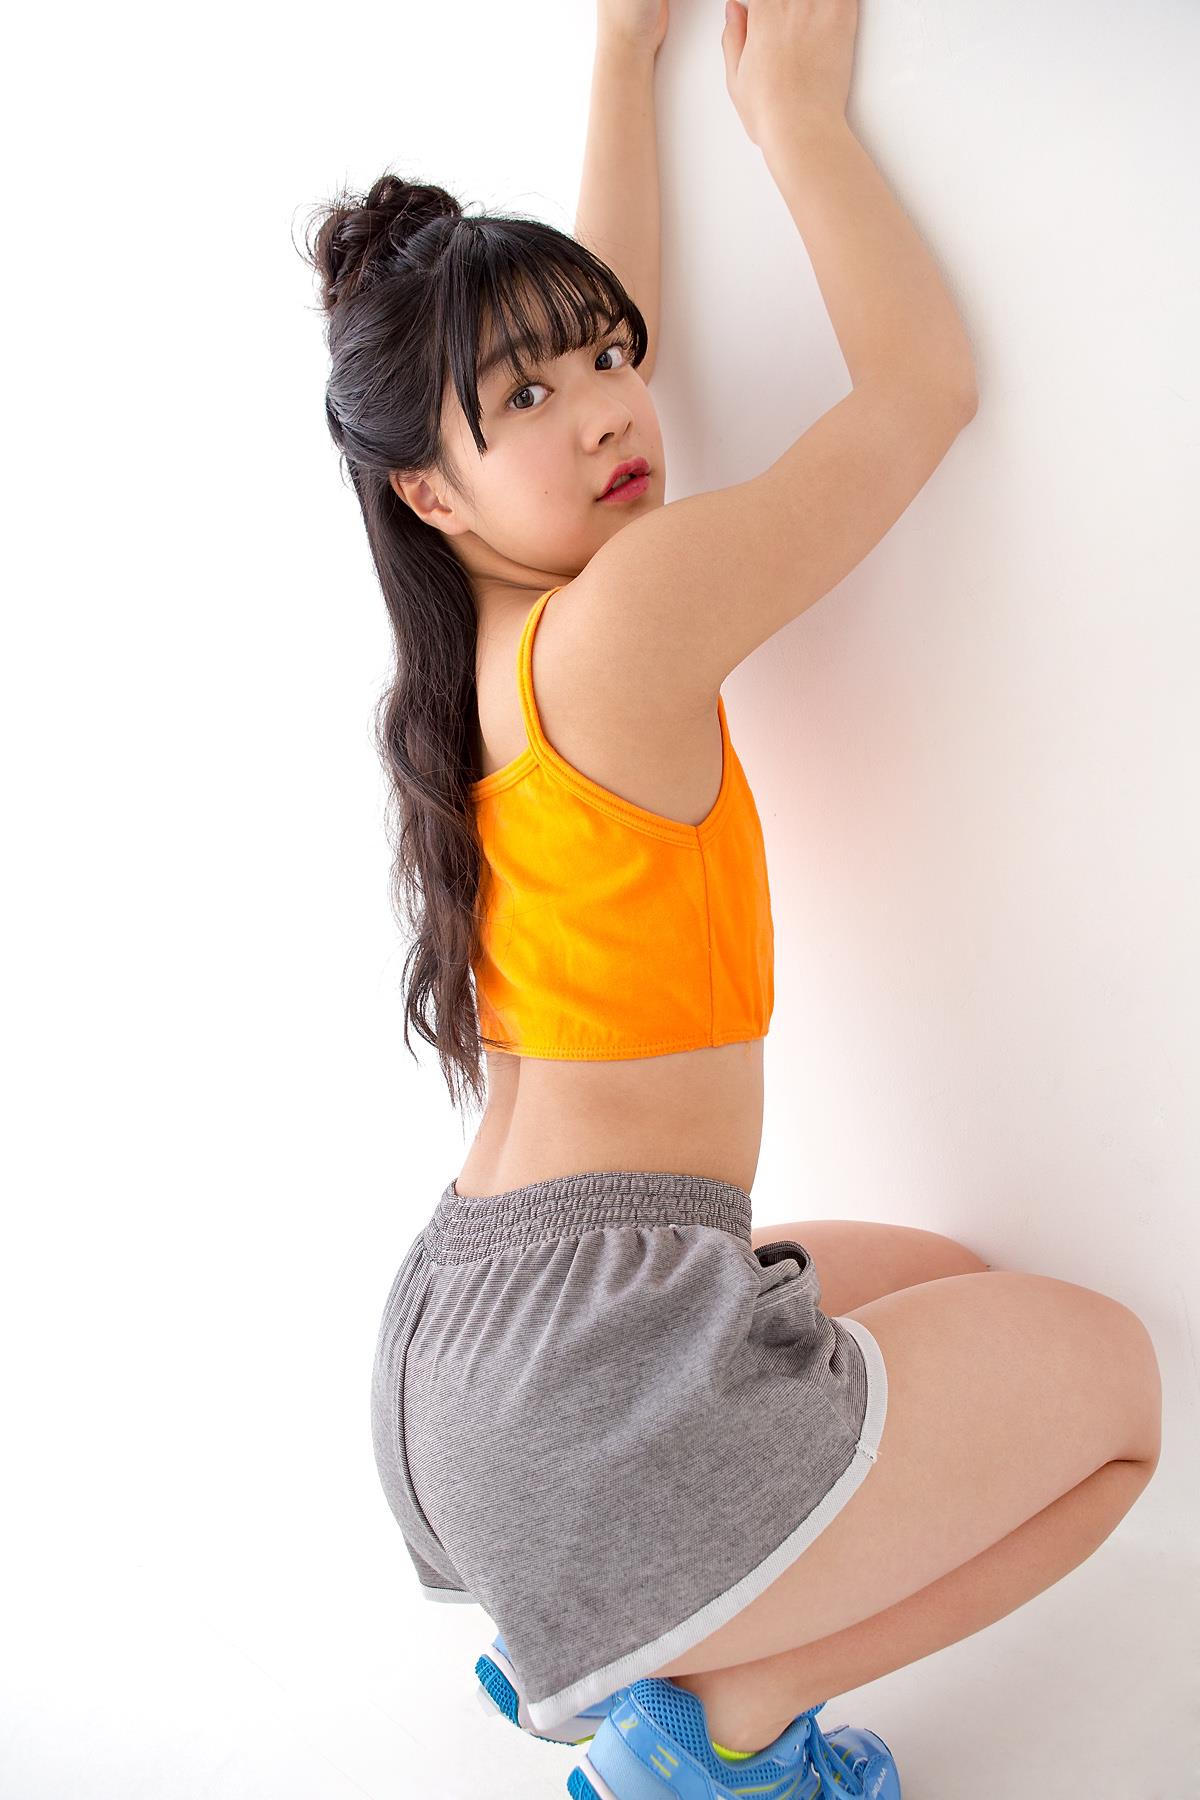 Minisuka.tv Saria Natsume 夏目咲莉愛 Premium Gallery 02 - 28.jpg